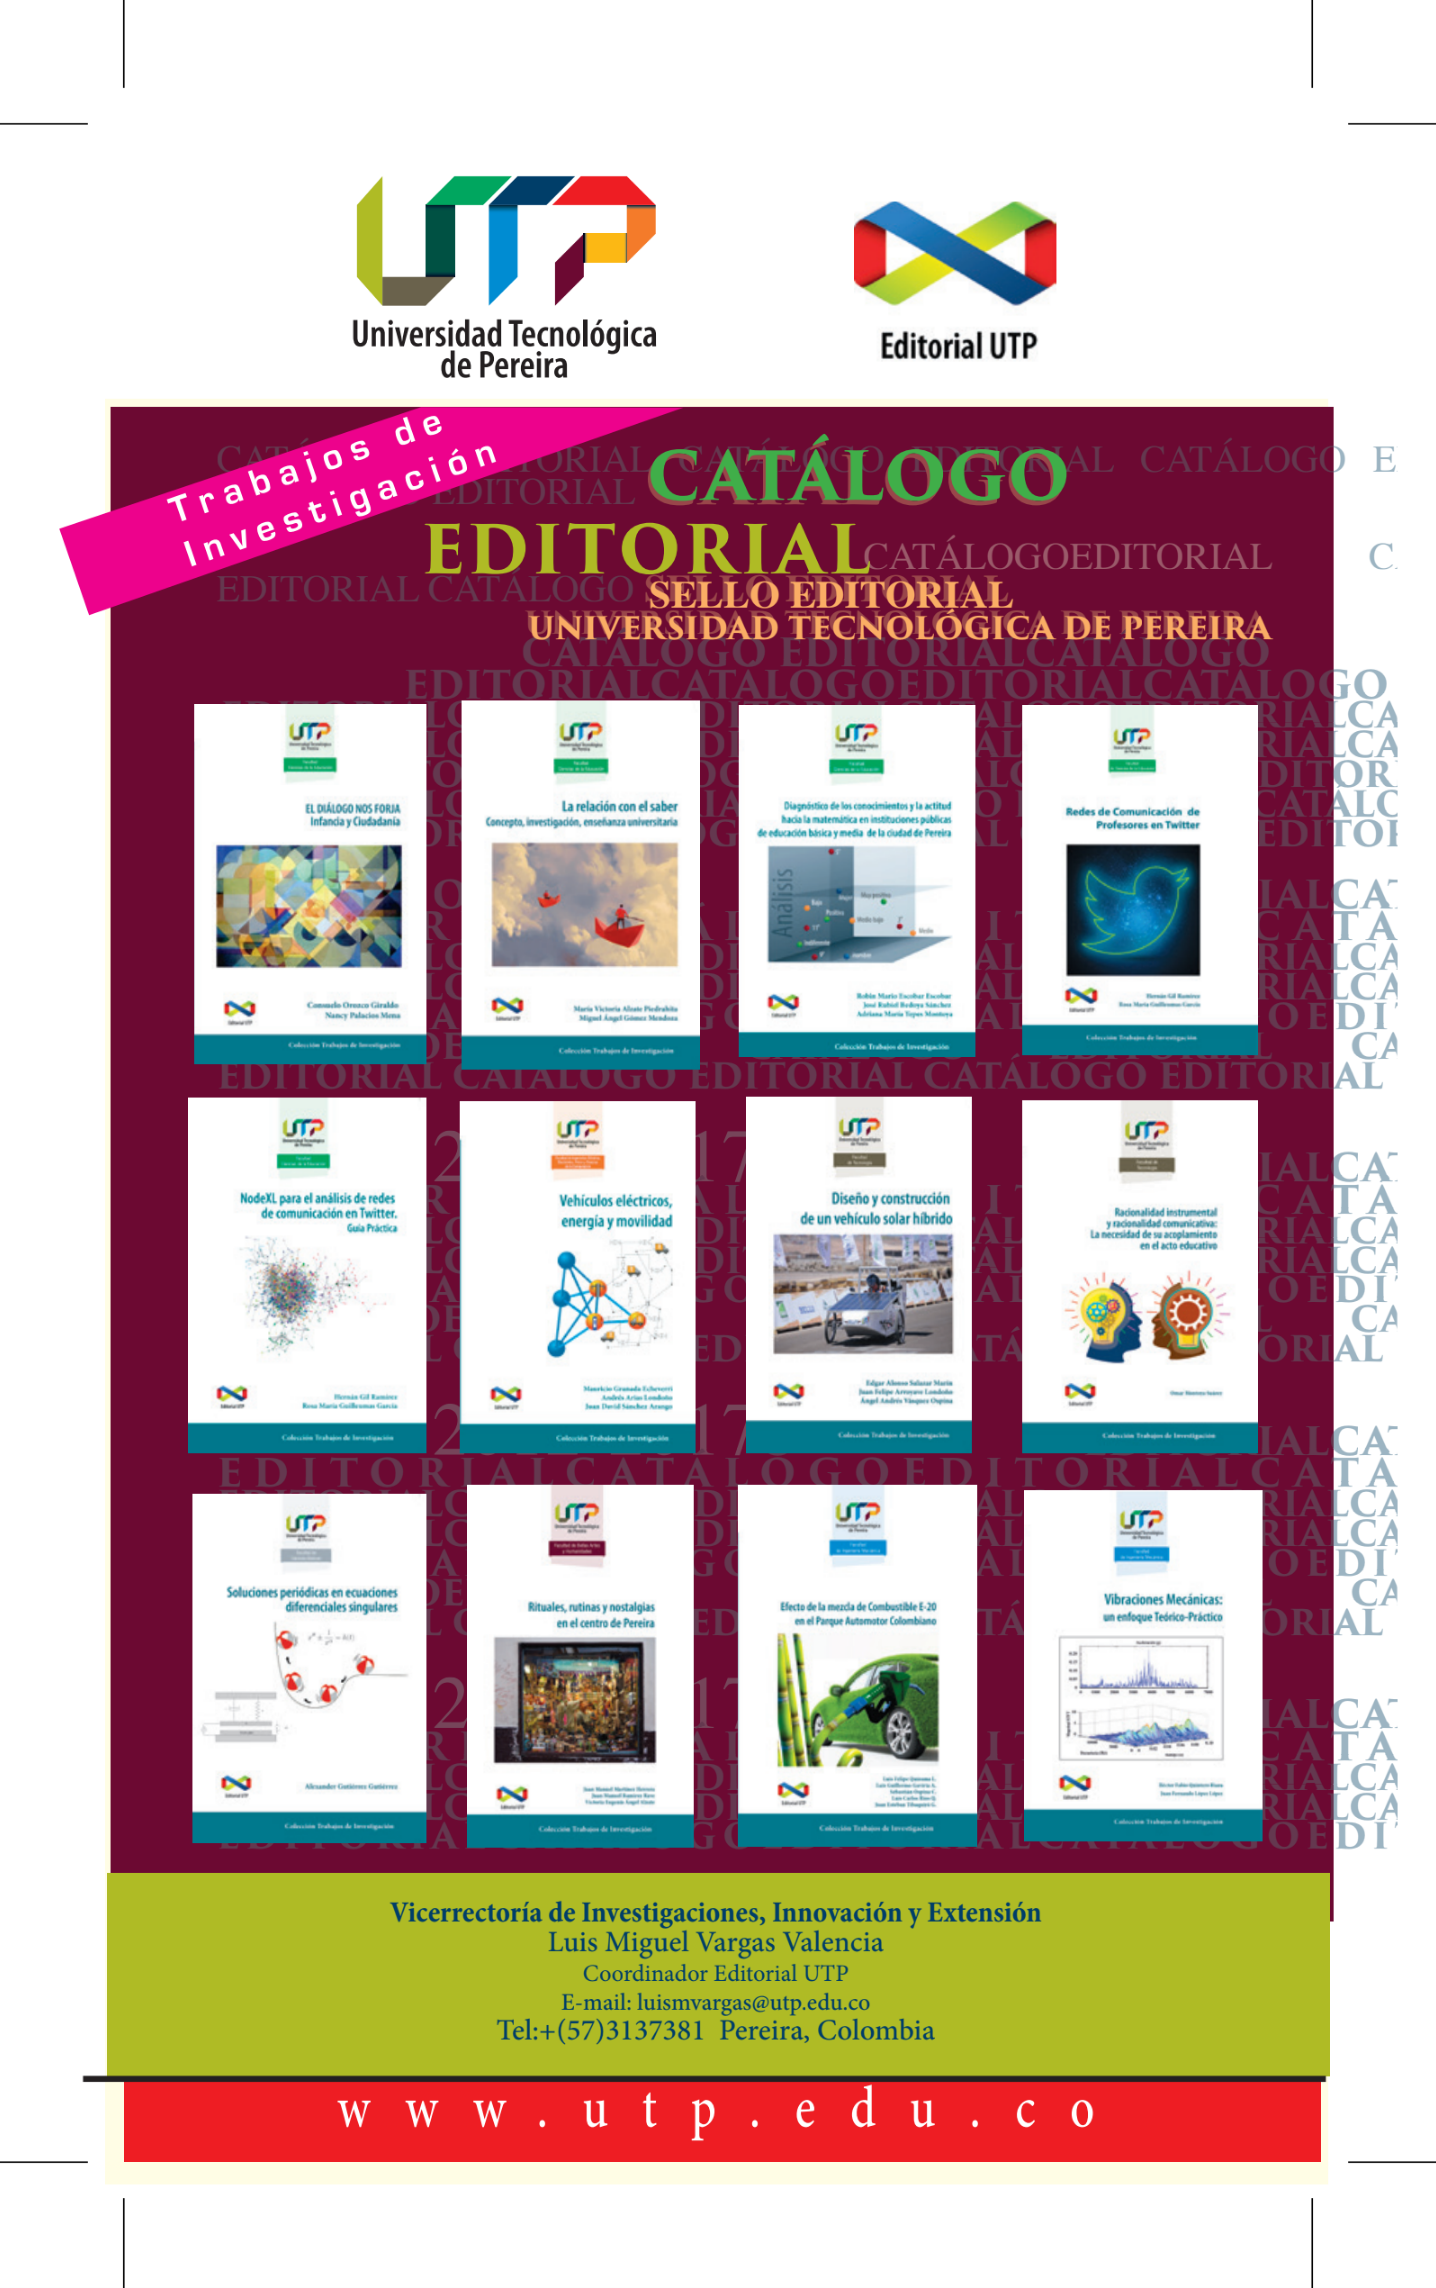 imagen catálogo editorial